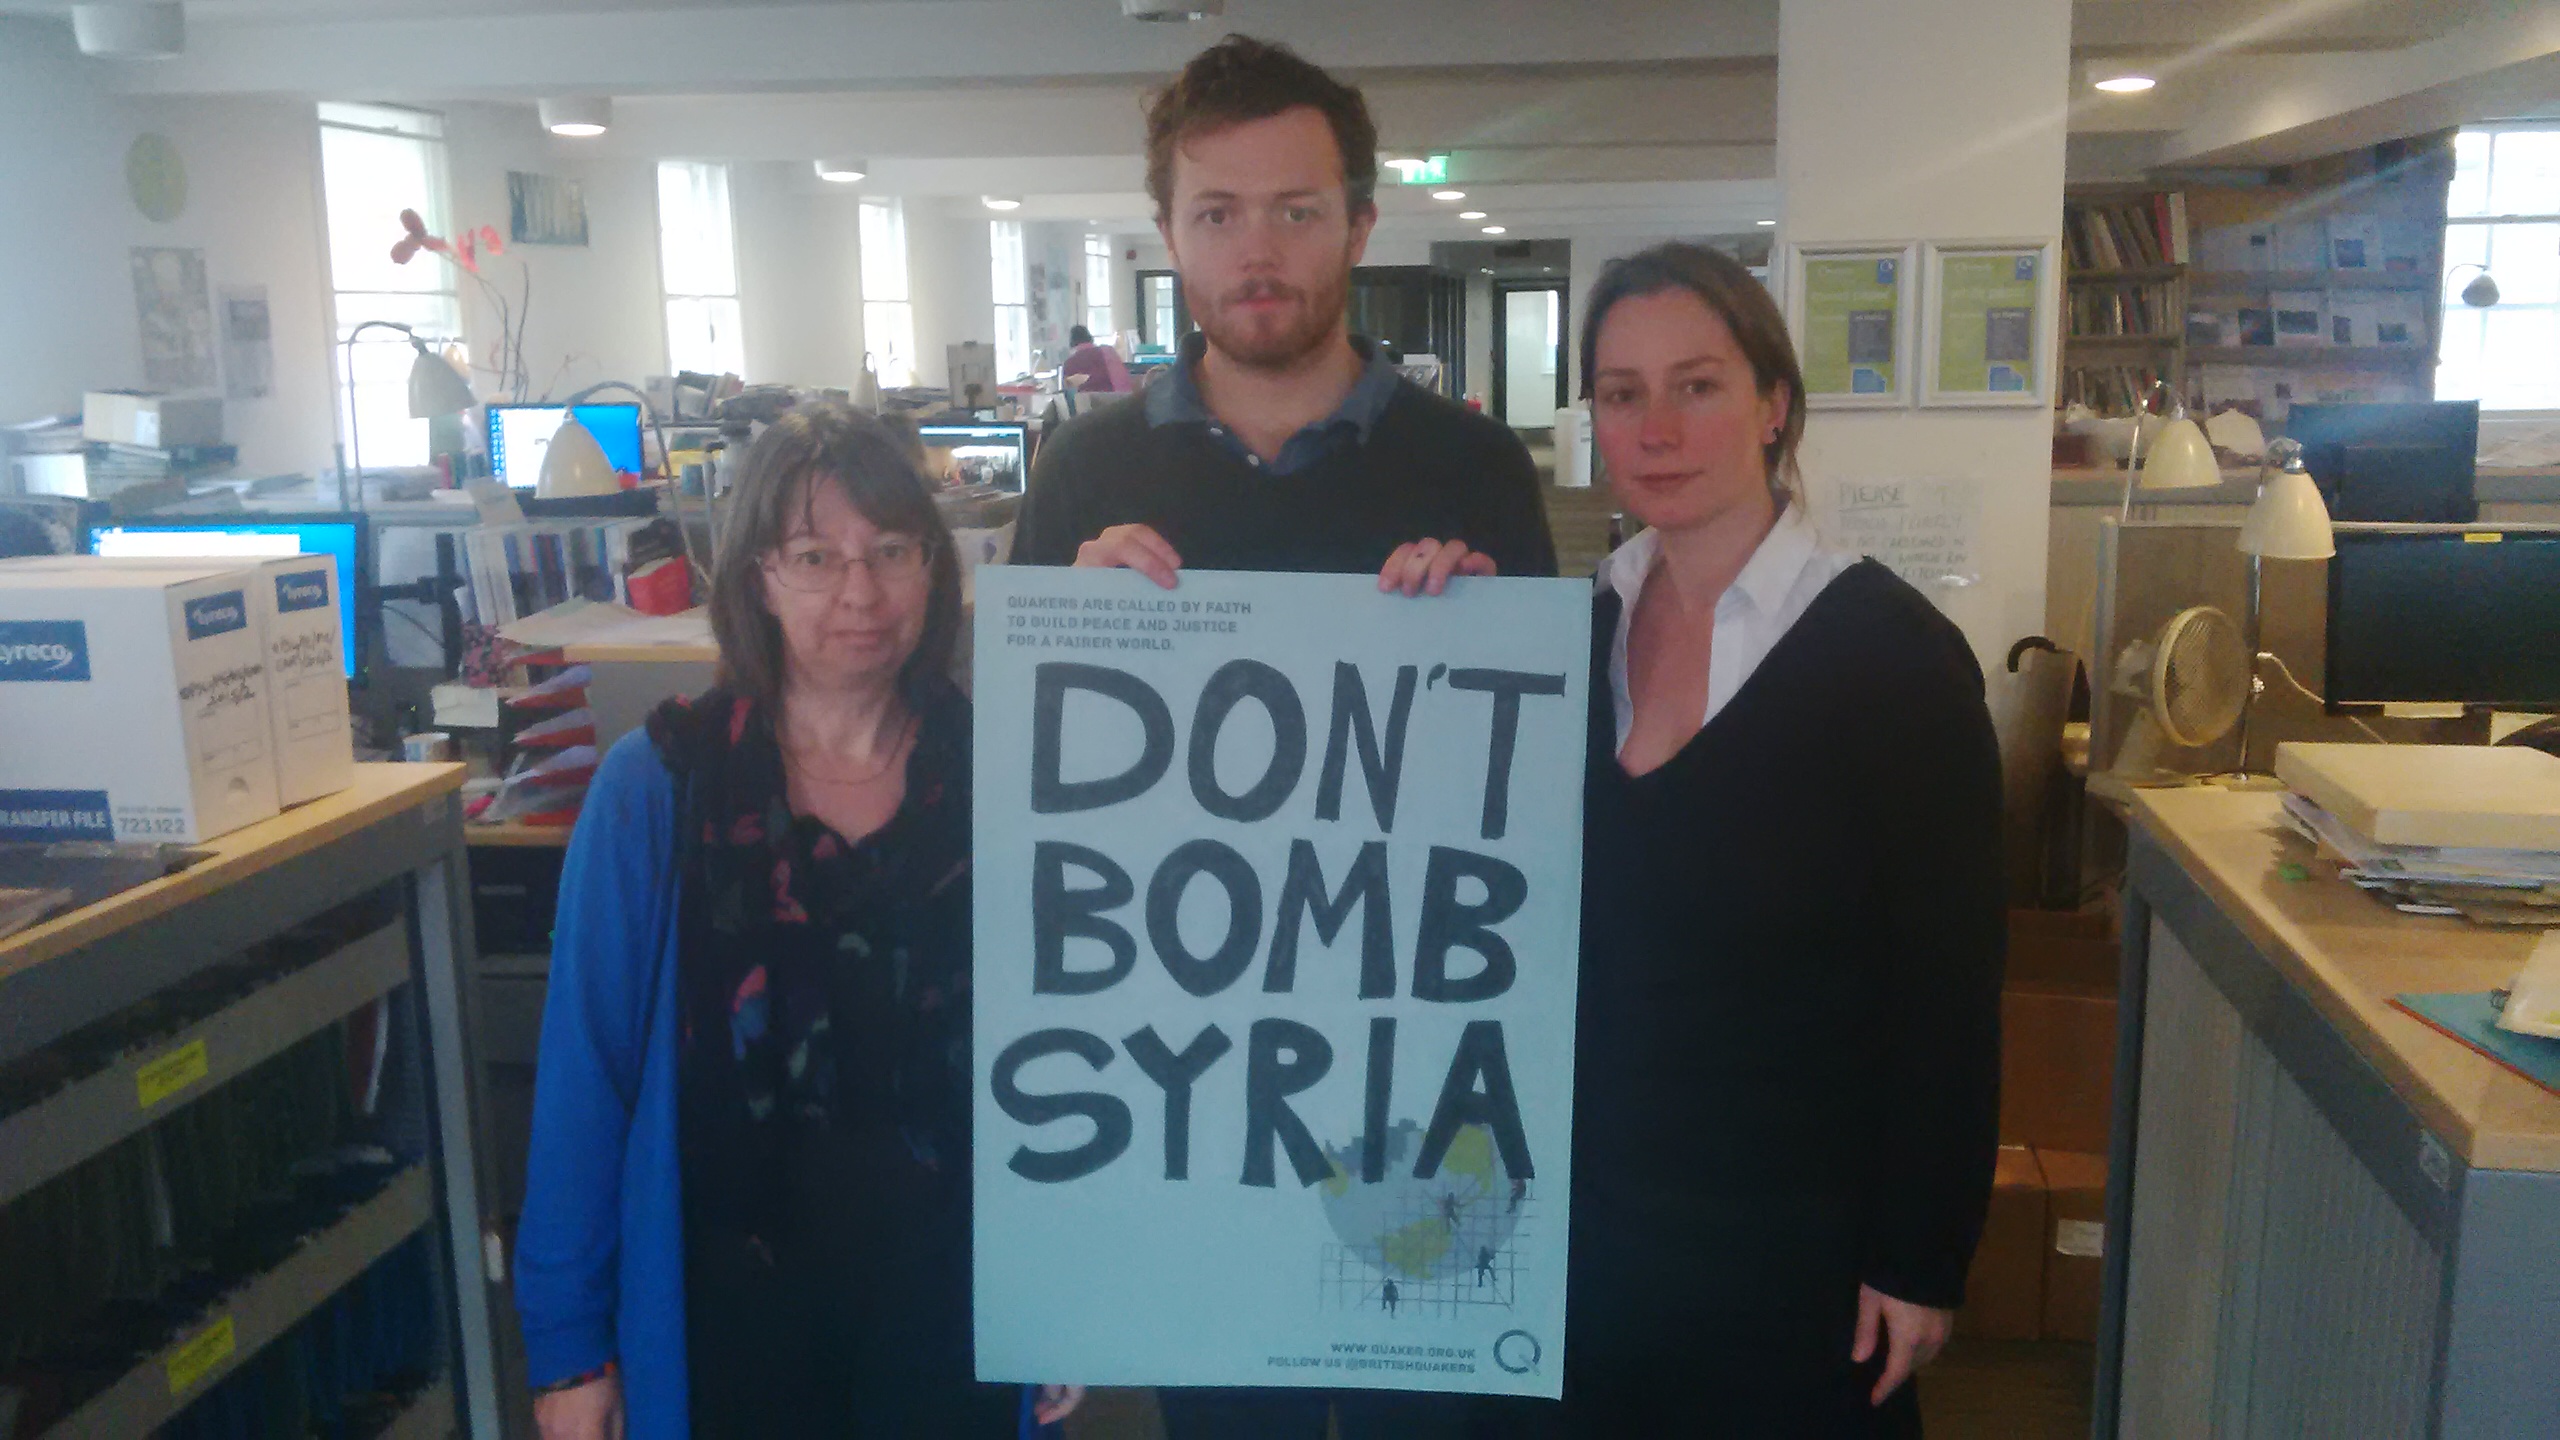 Urgent: Birmingham MPs undecided on Syria